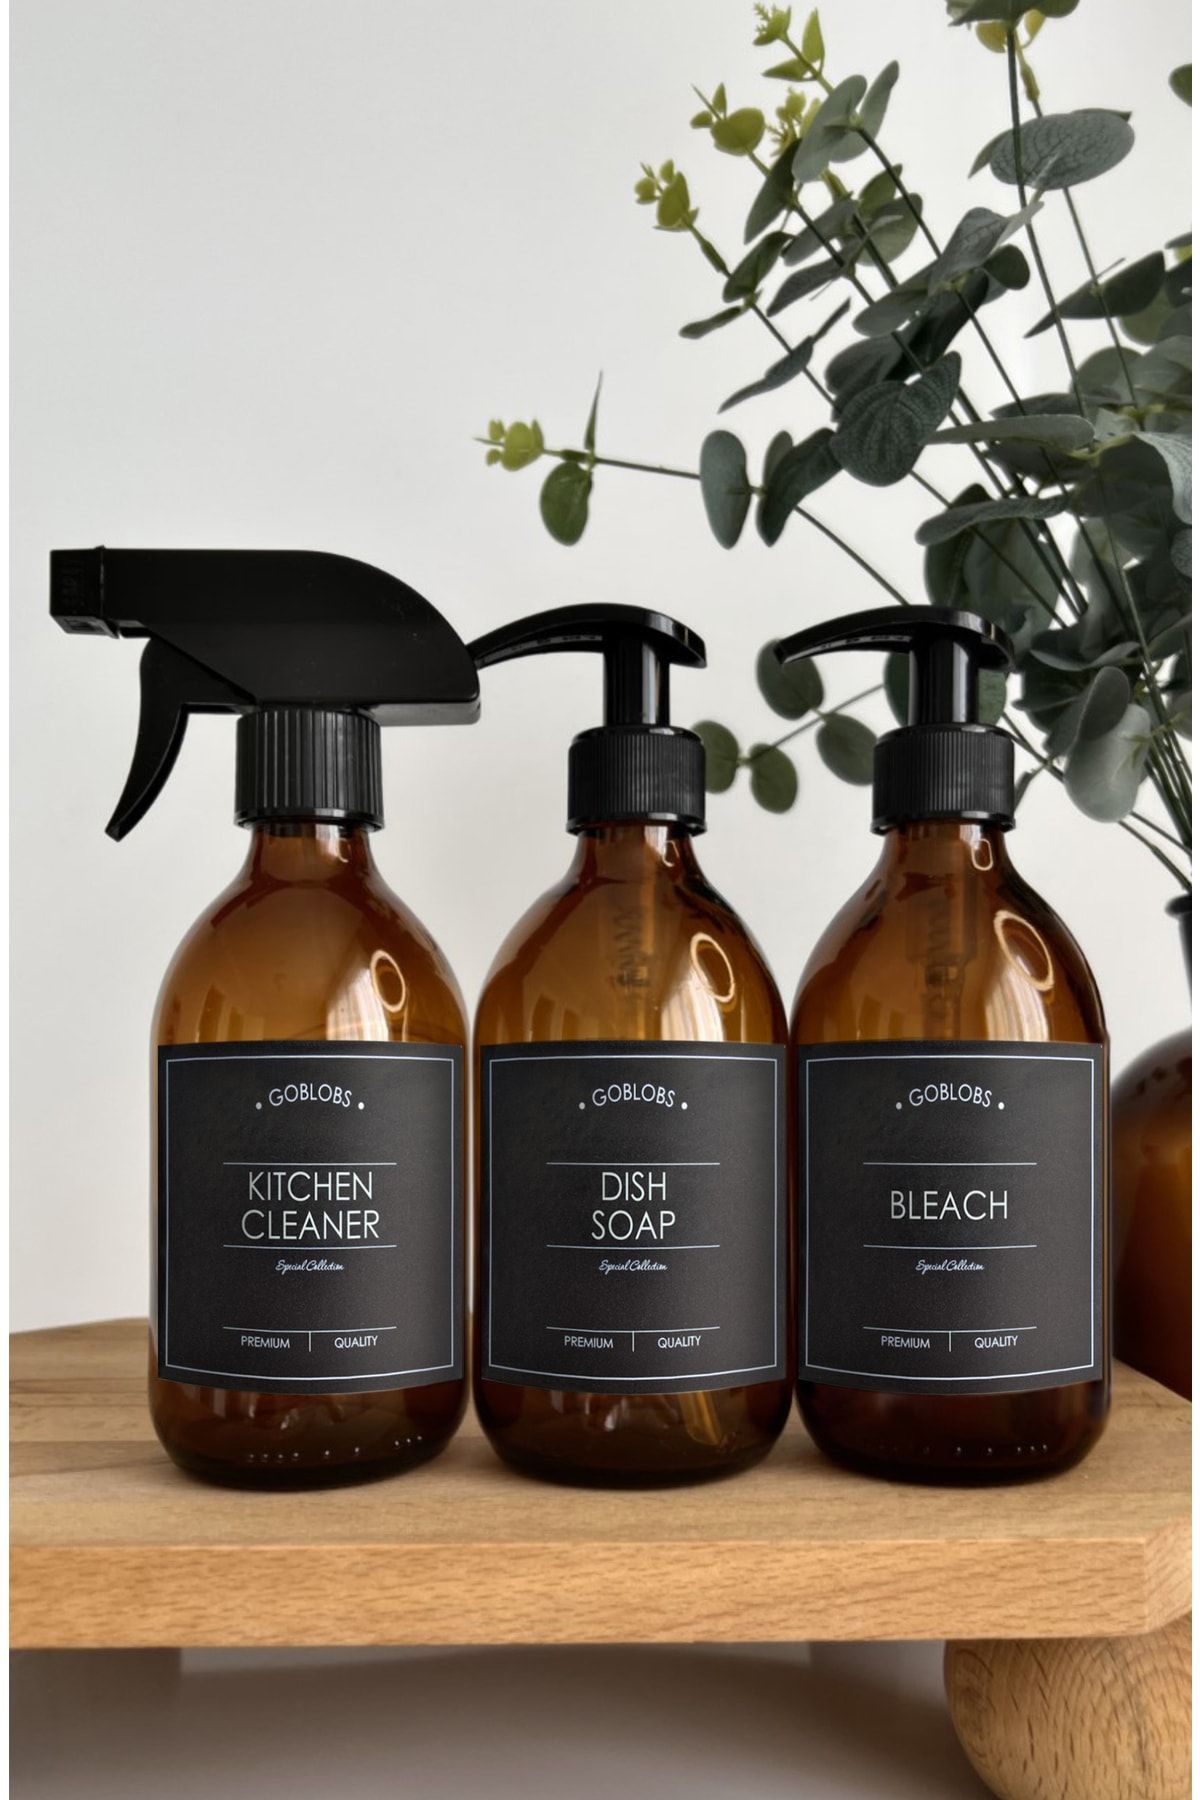 GO BLOBS 3'lü Set 300ml Amber Şişe Sprey Kitchen Cleaner & Dısh Soap & Bleach Siyah